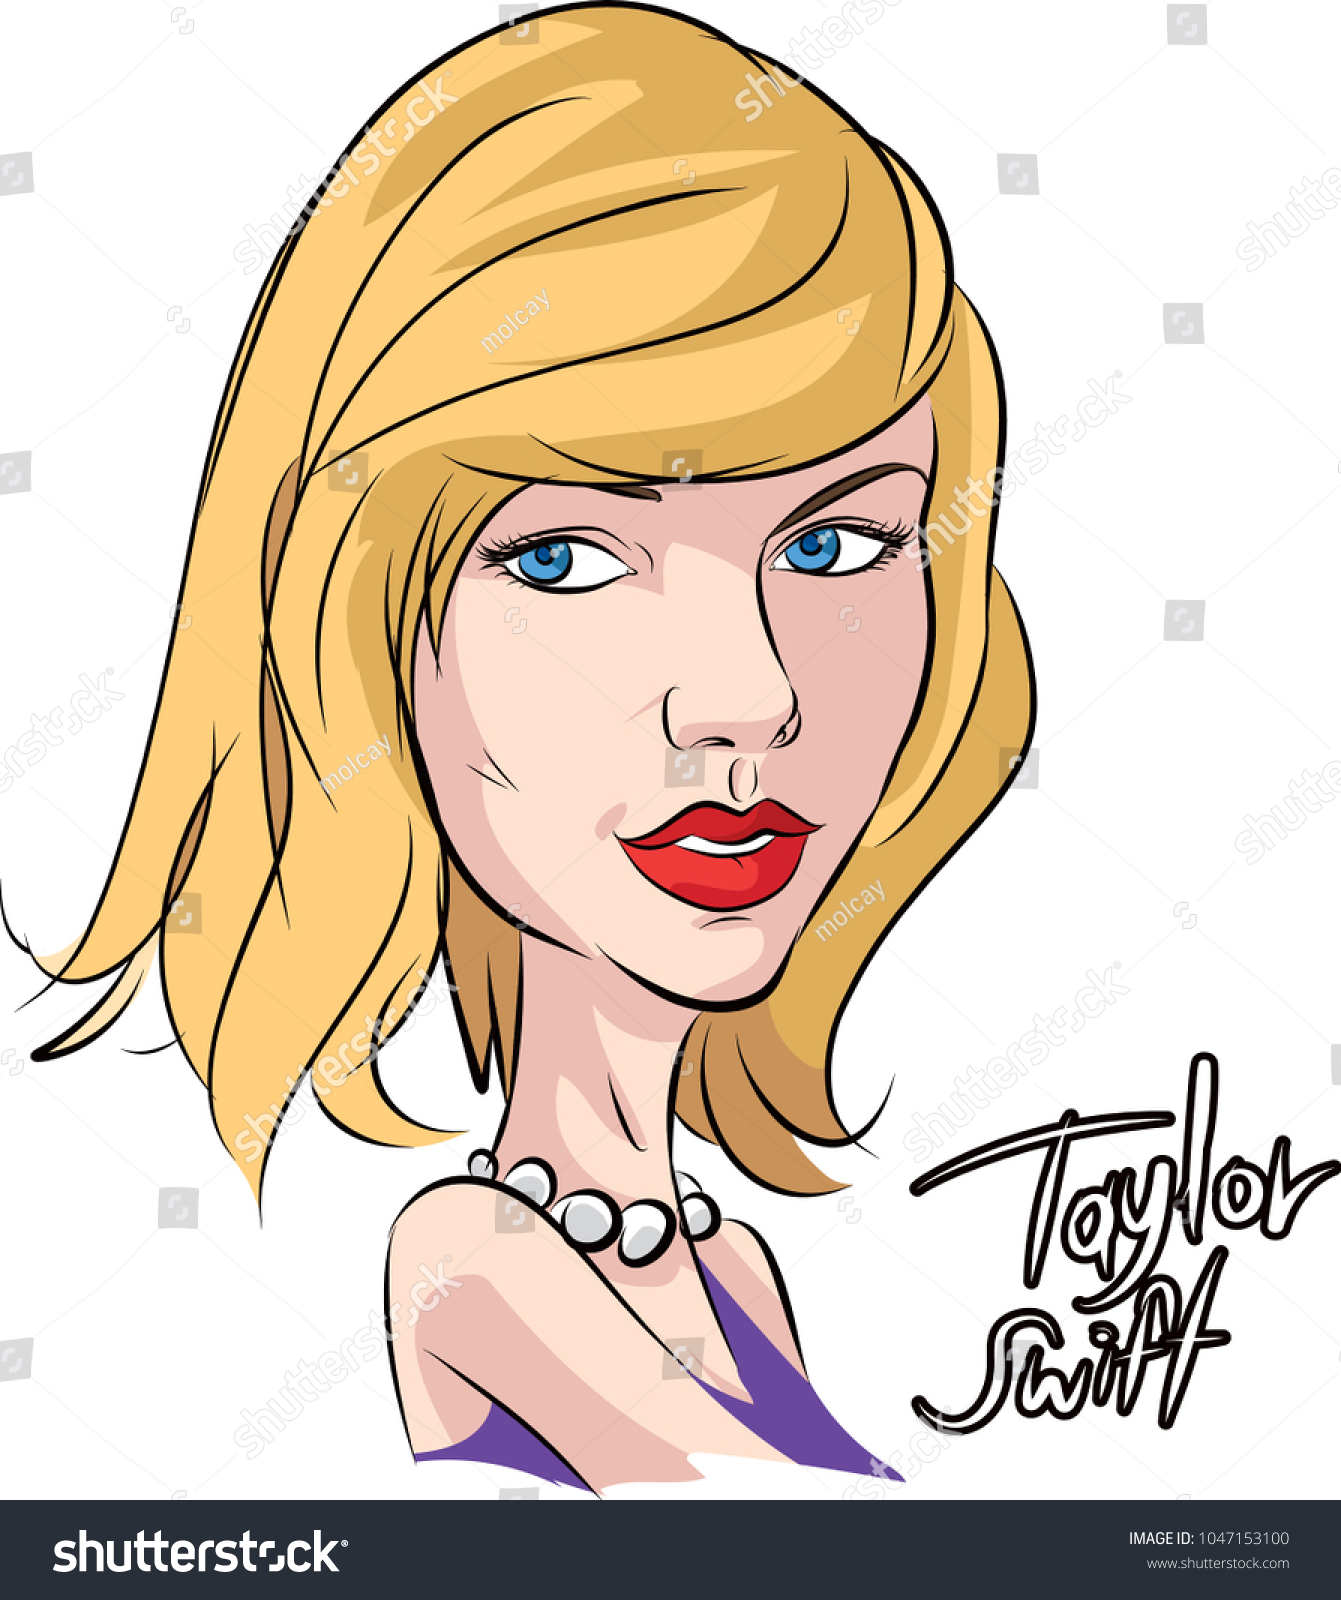 Taylor Swift Famous Person Cartoon Portreit のベクター画像素材 ロイヤリティフリー